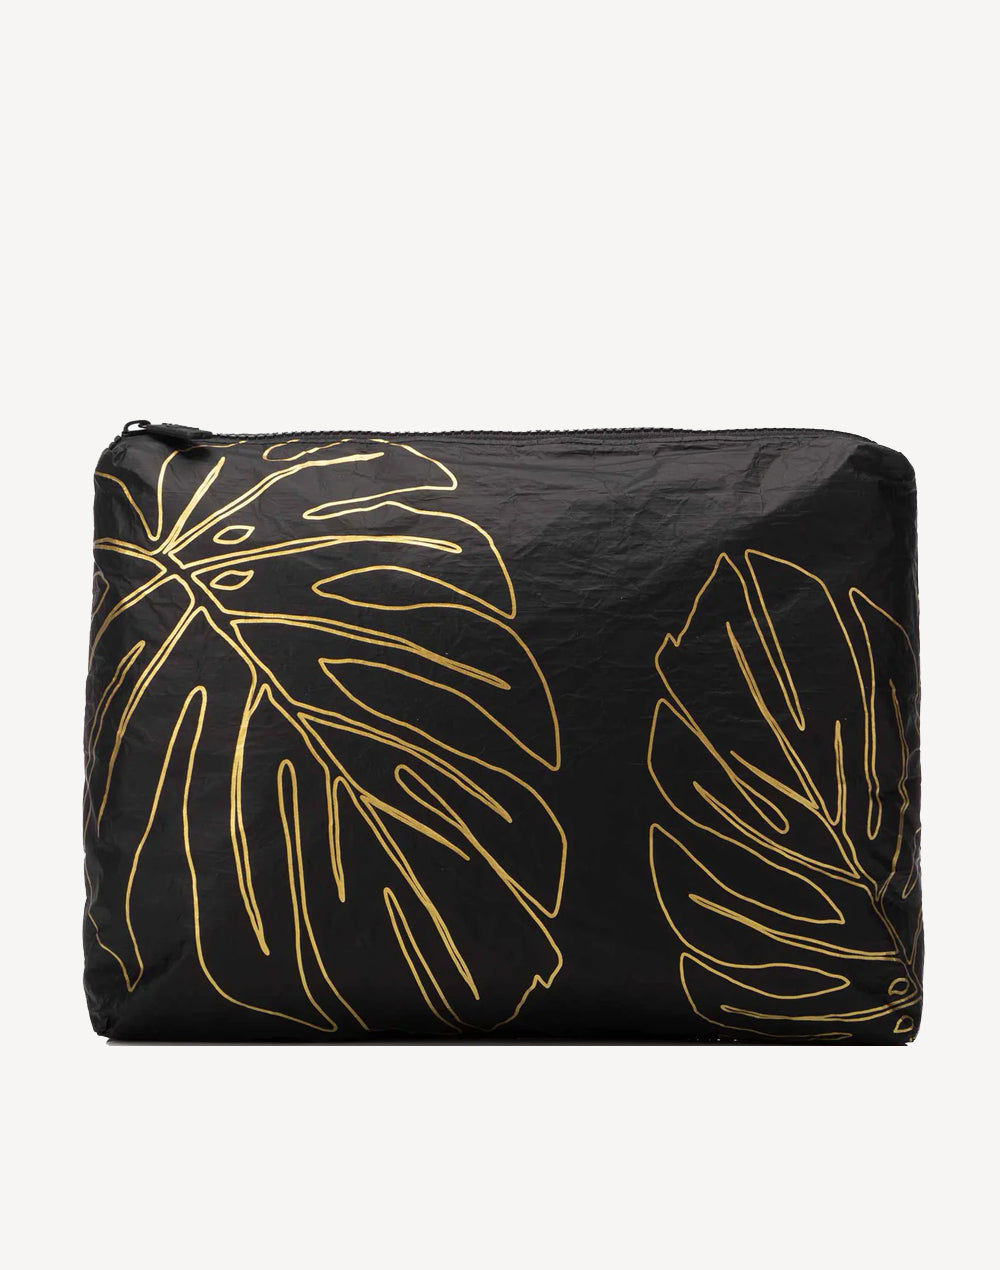 Lanai Mid Size Pouch#color_lanai-gold-on-black